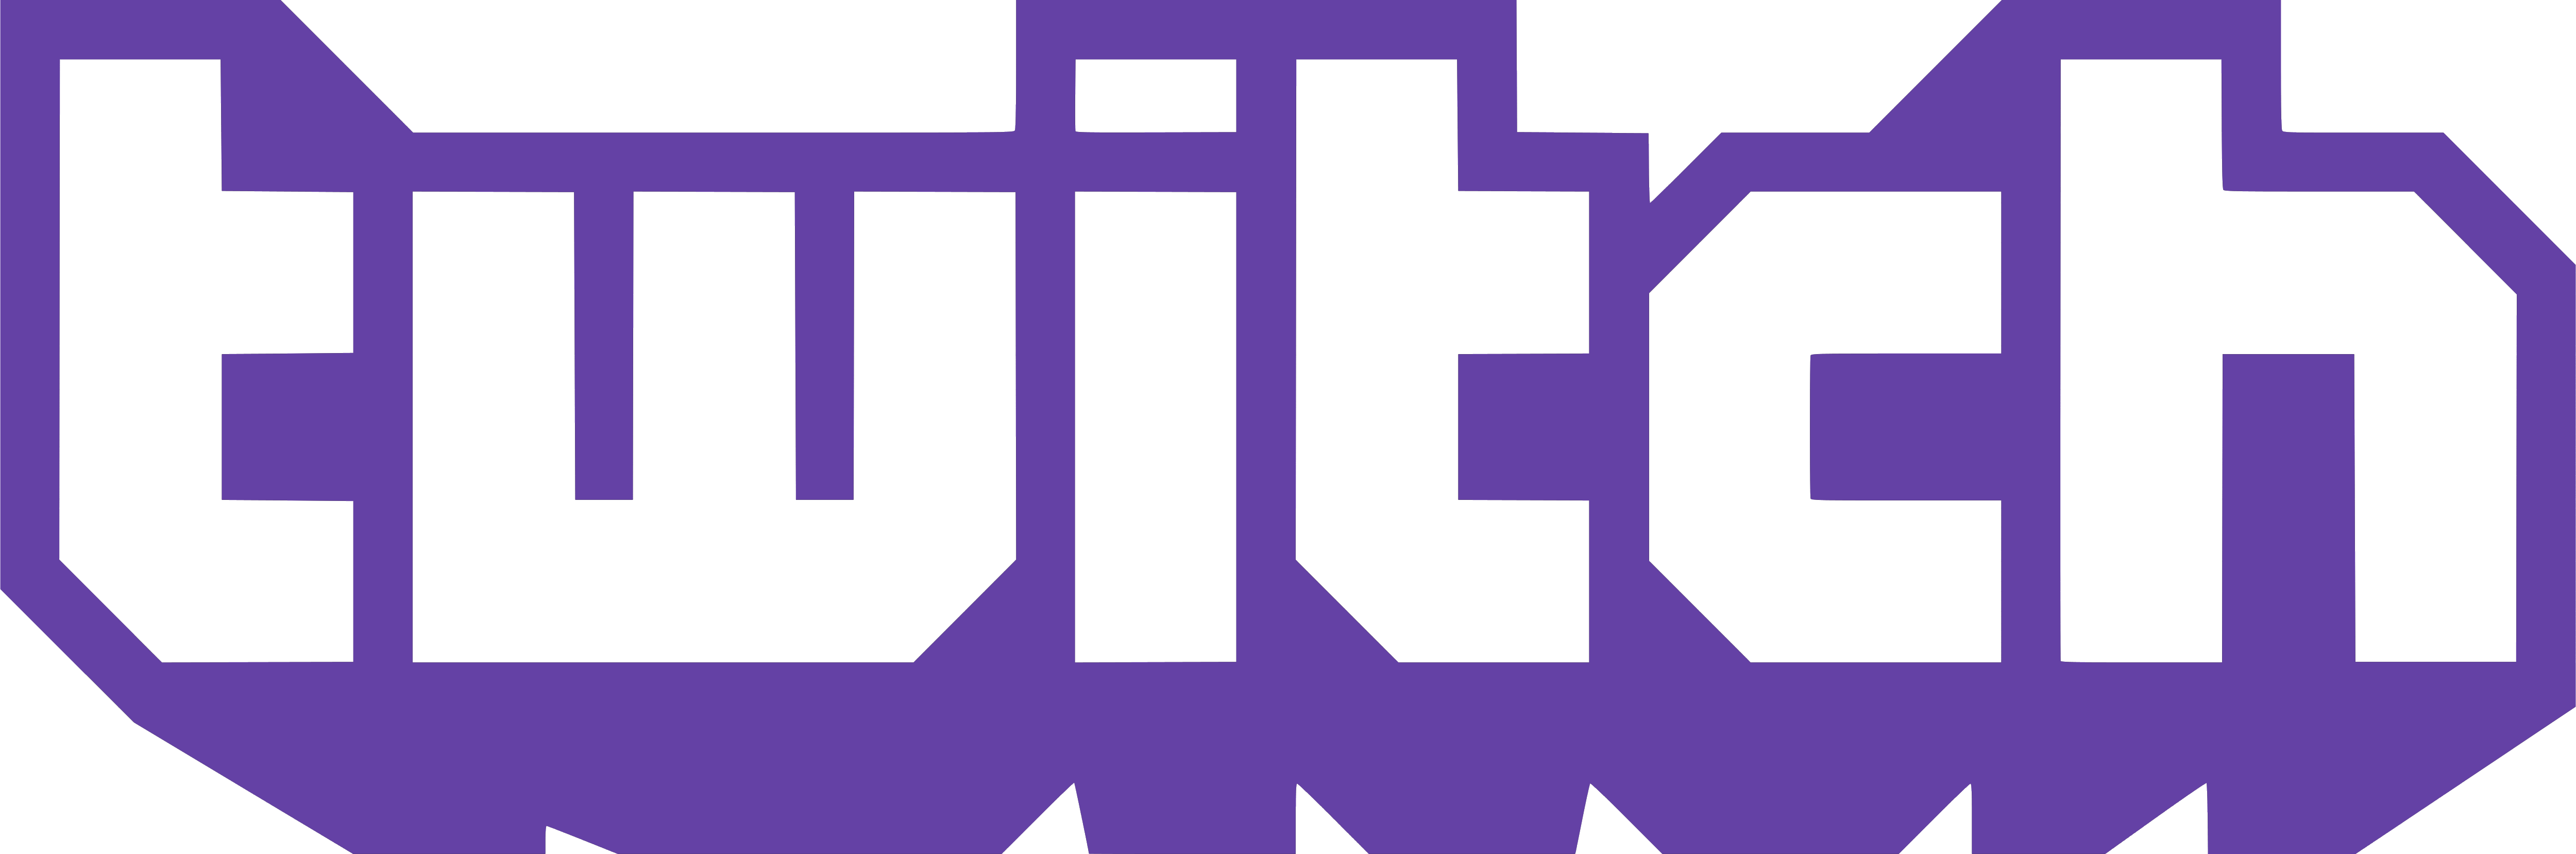 Twitch – Logos Download - Twitch Logo Clip Art